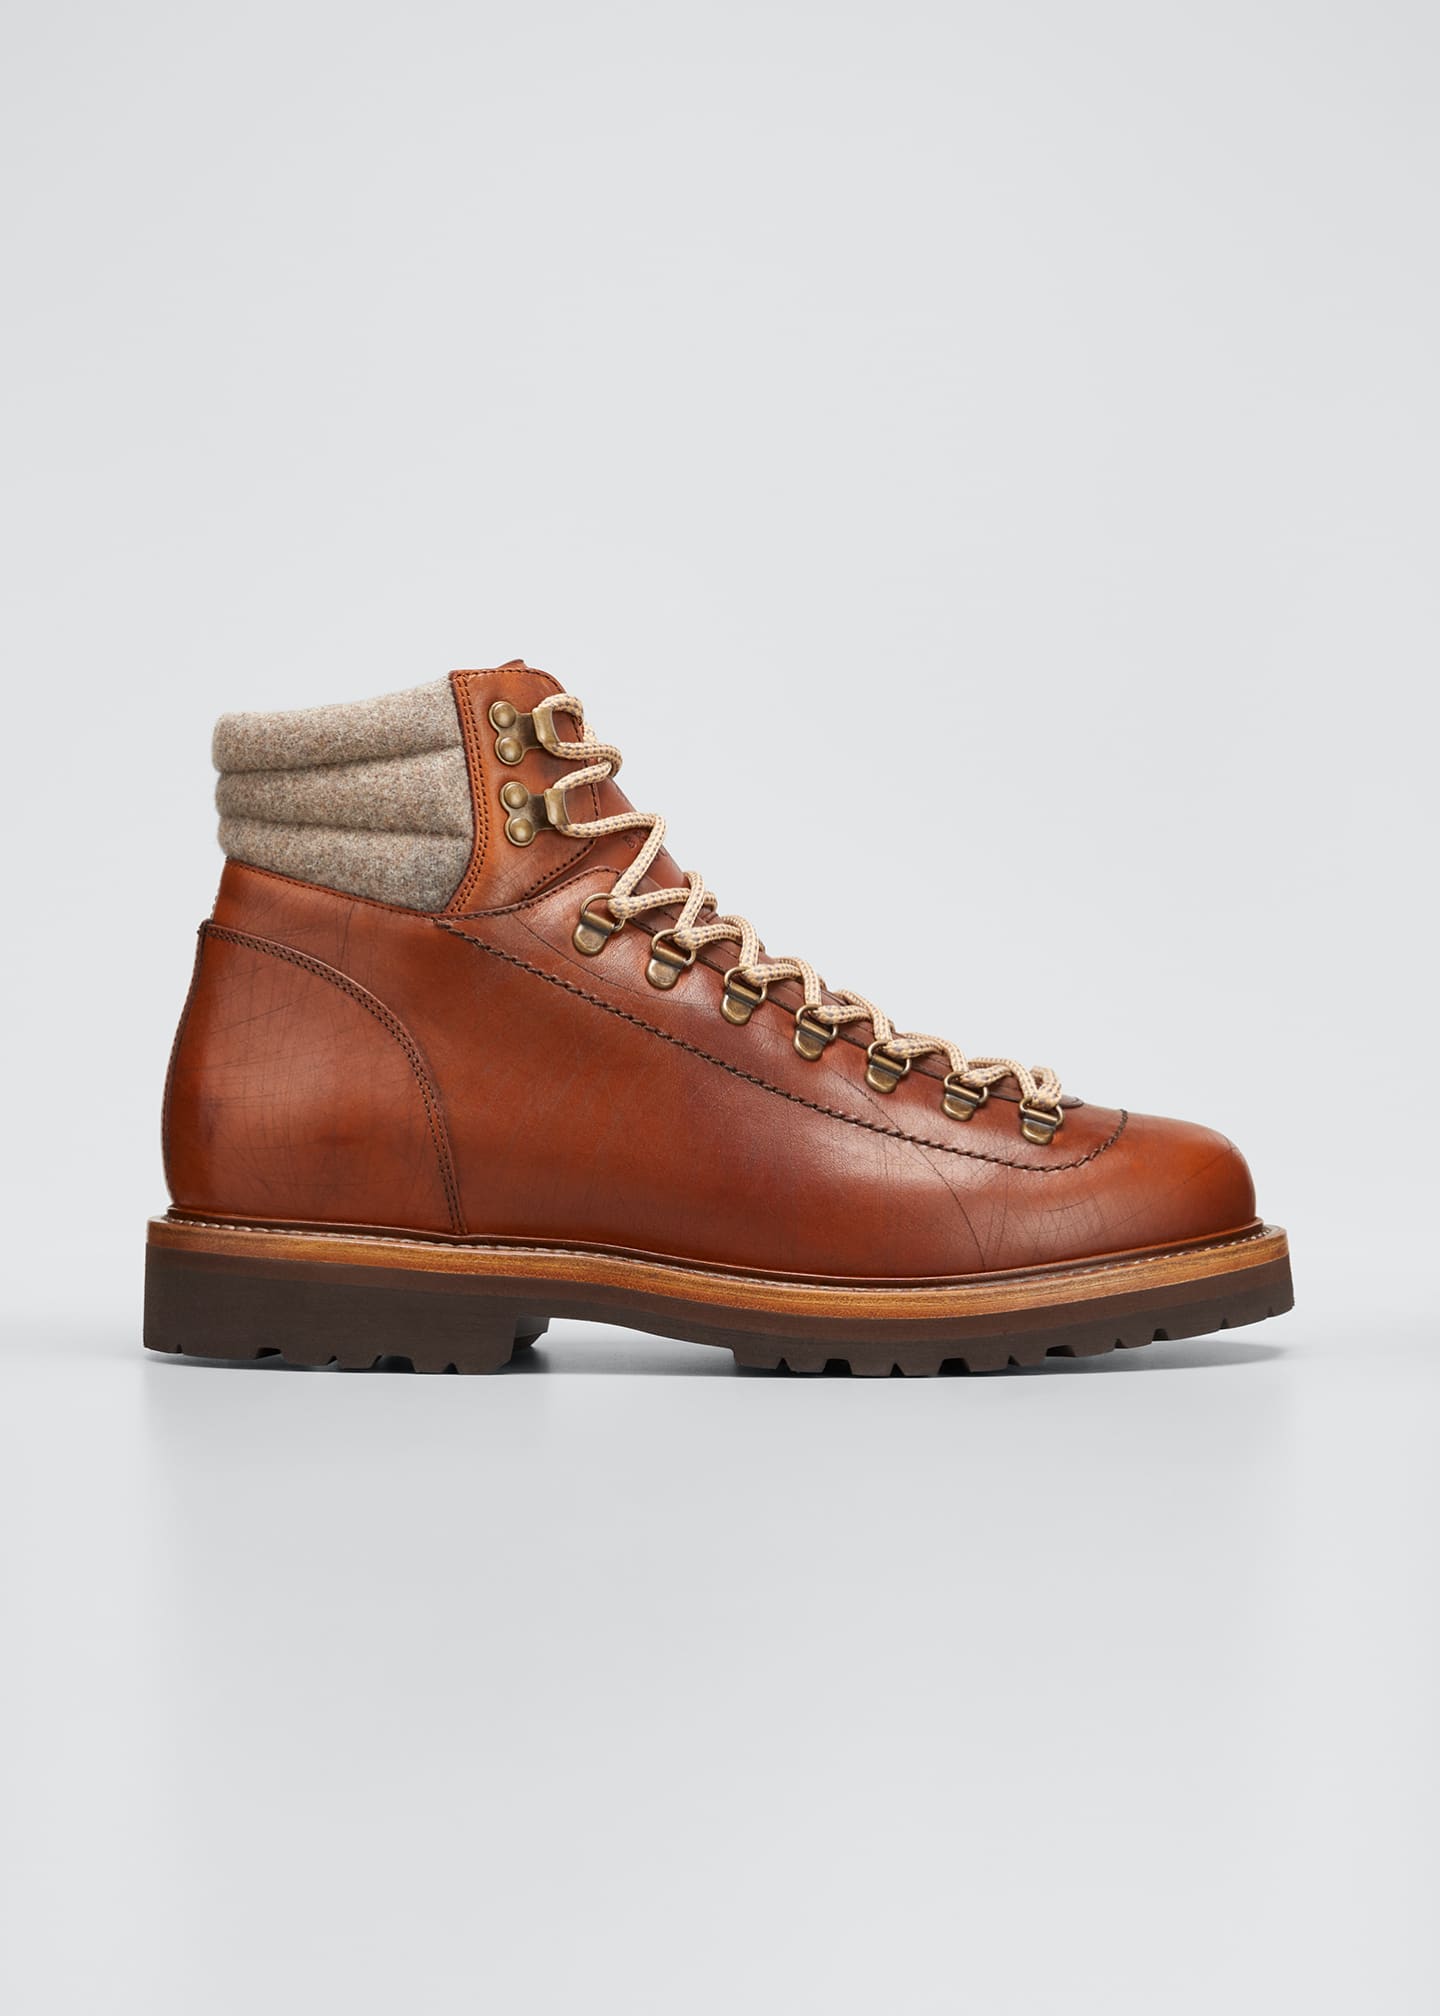 Brunello Cucinelli Men's Leather Hiking Boots - Bergdorf Goodman